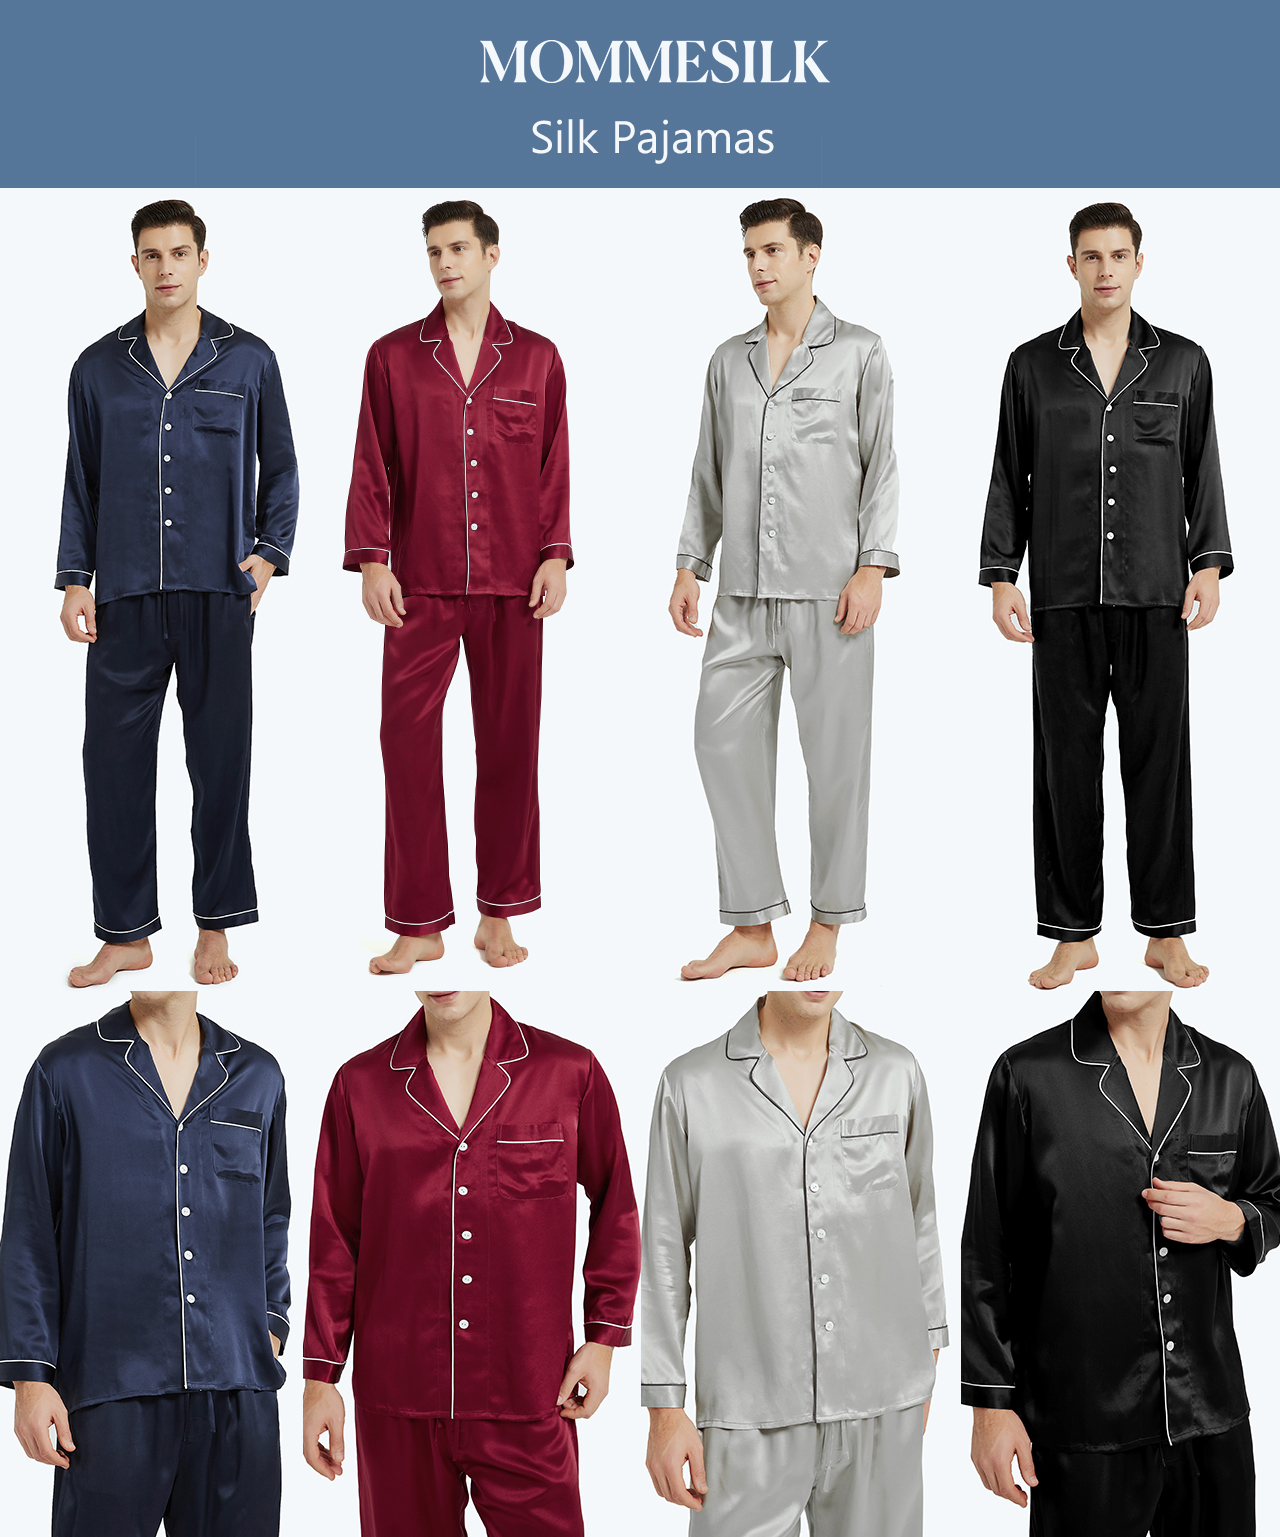 At Home - Piped Silk Pajamas Set for Men